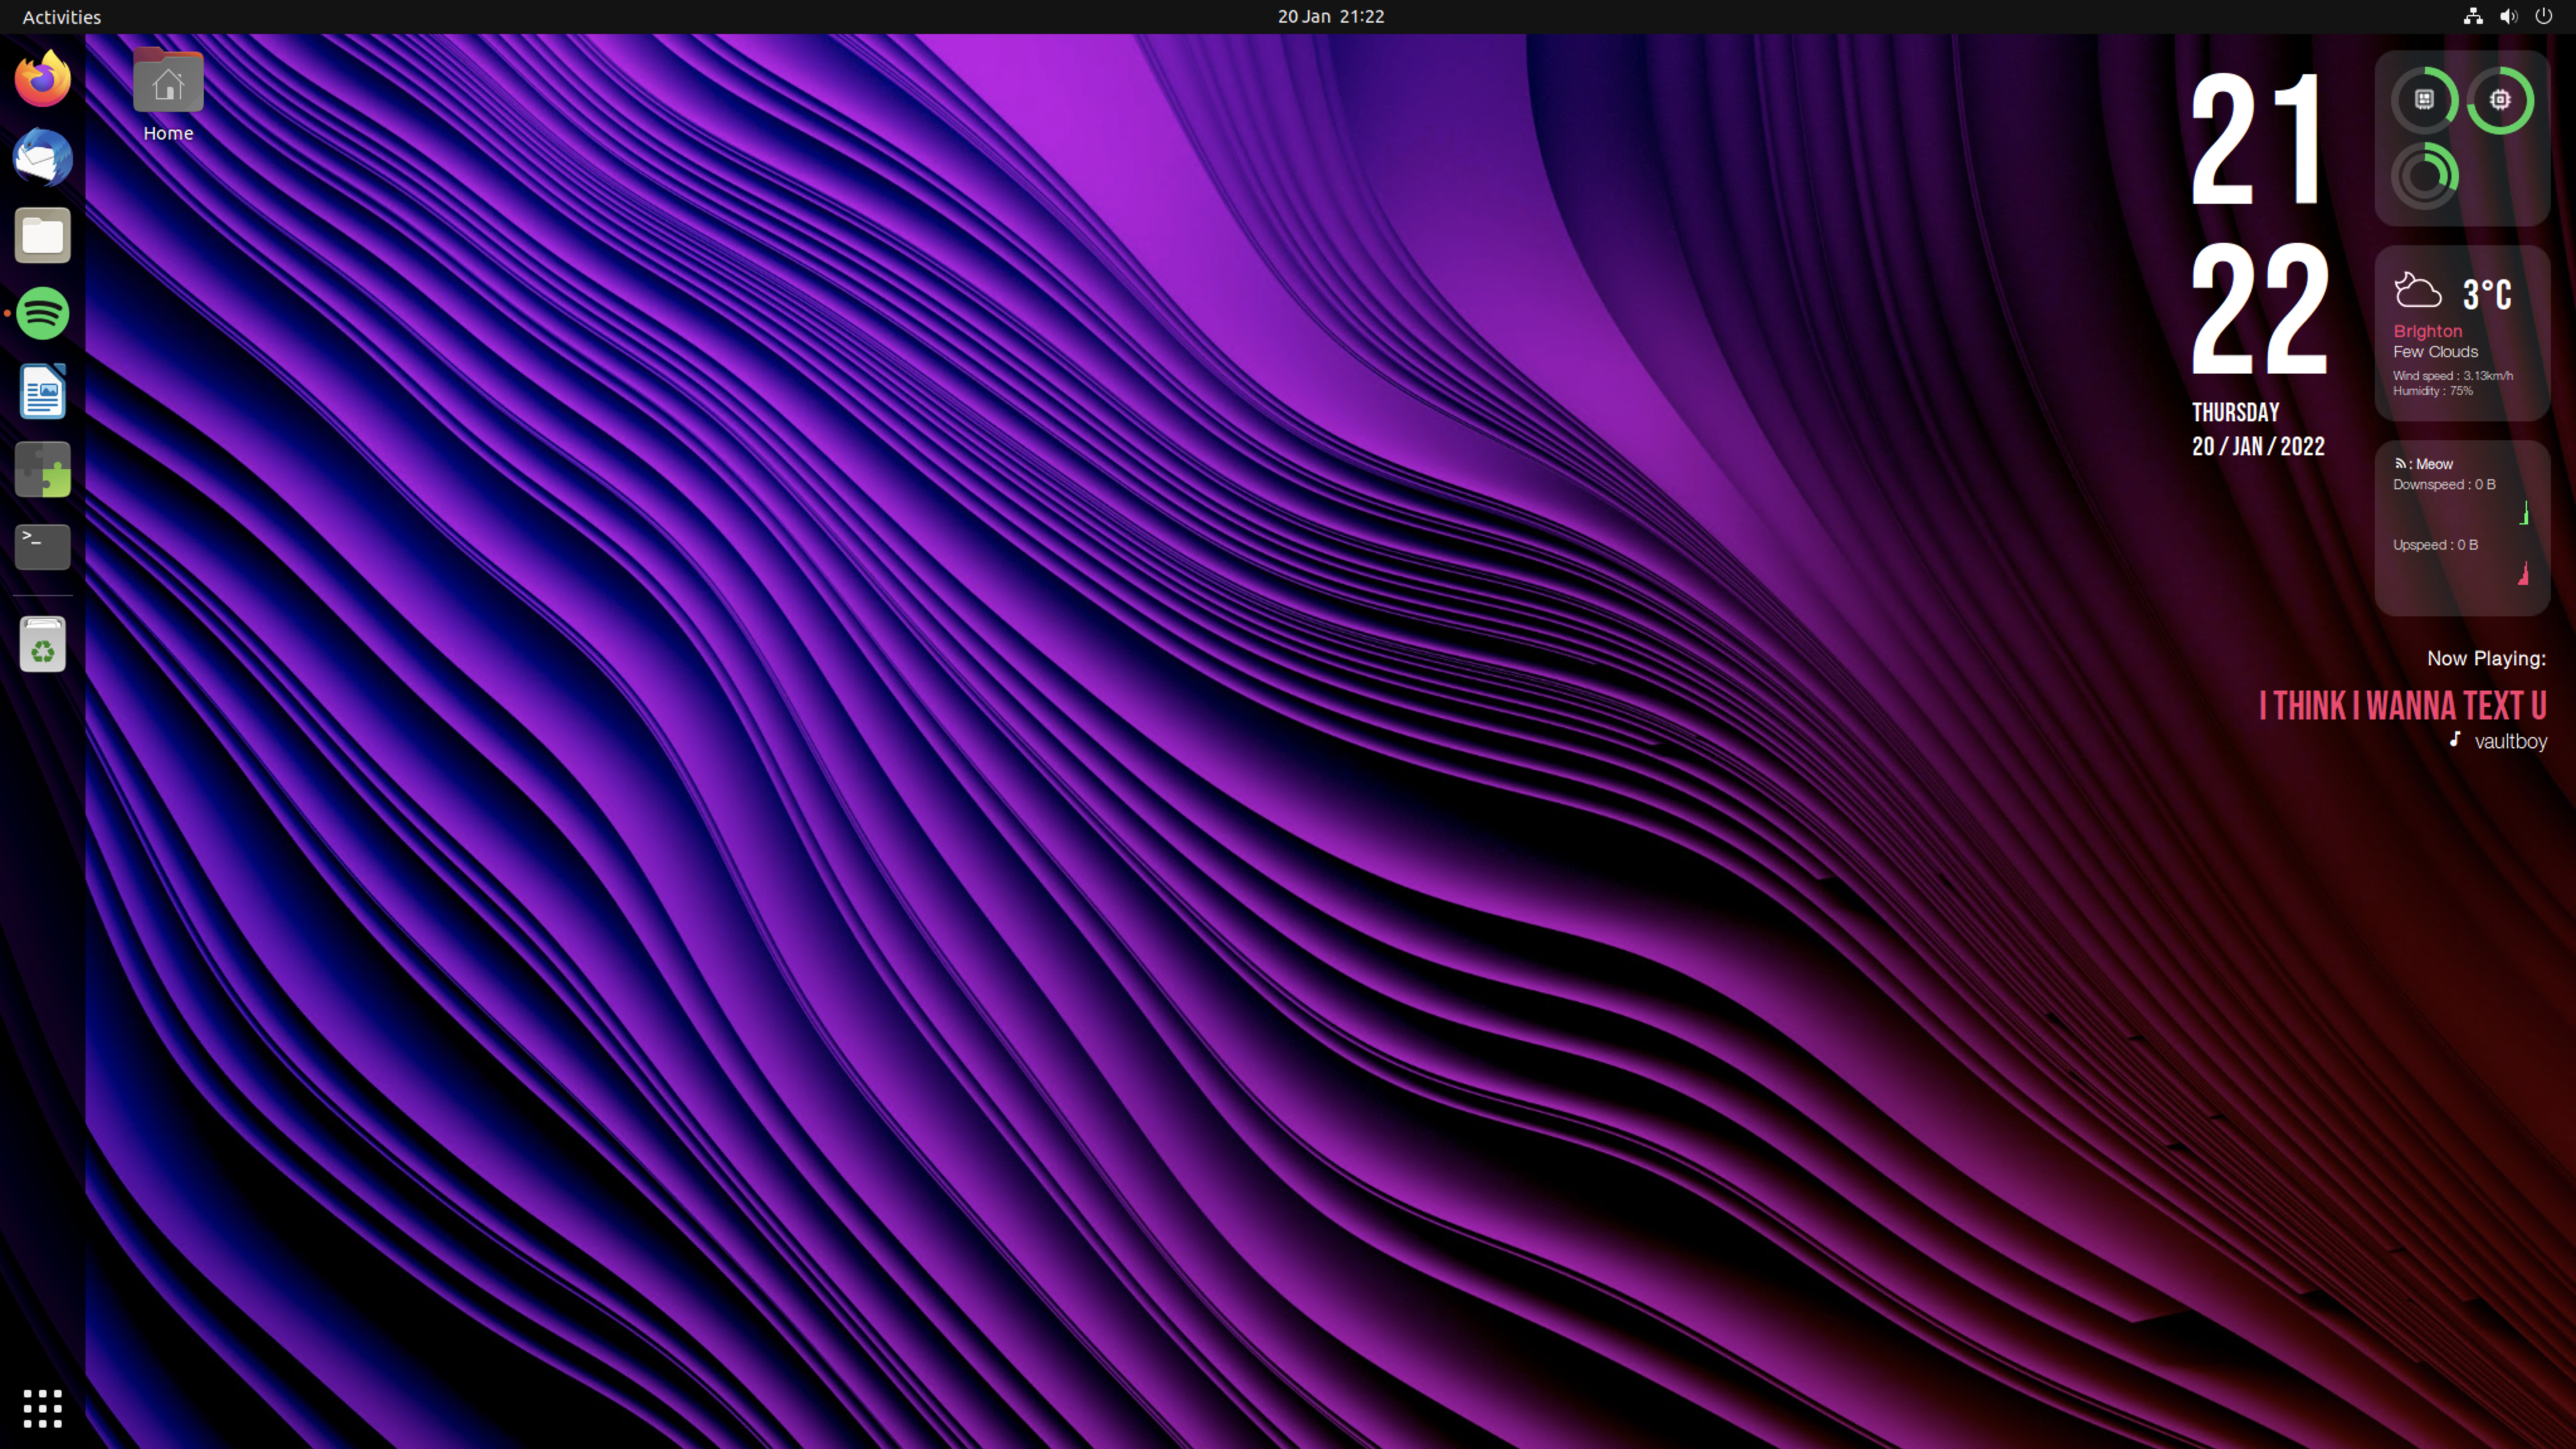 How to Change Ubuntu's Login Screen Background - OMG! Ubuntu